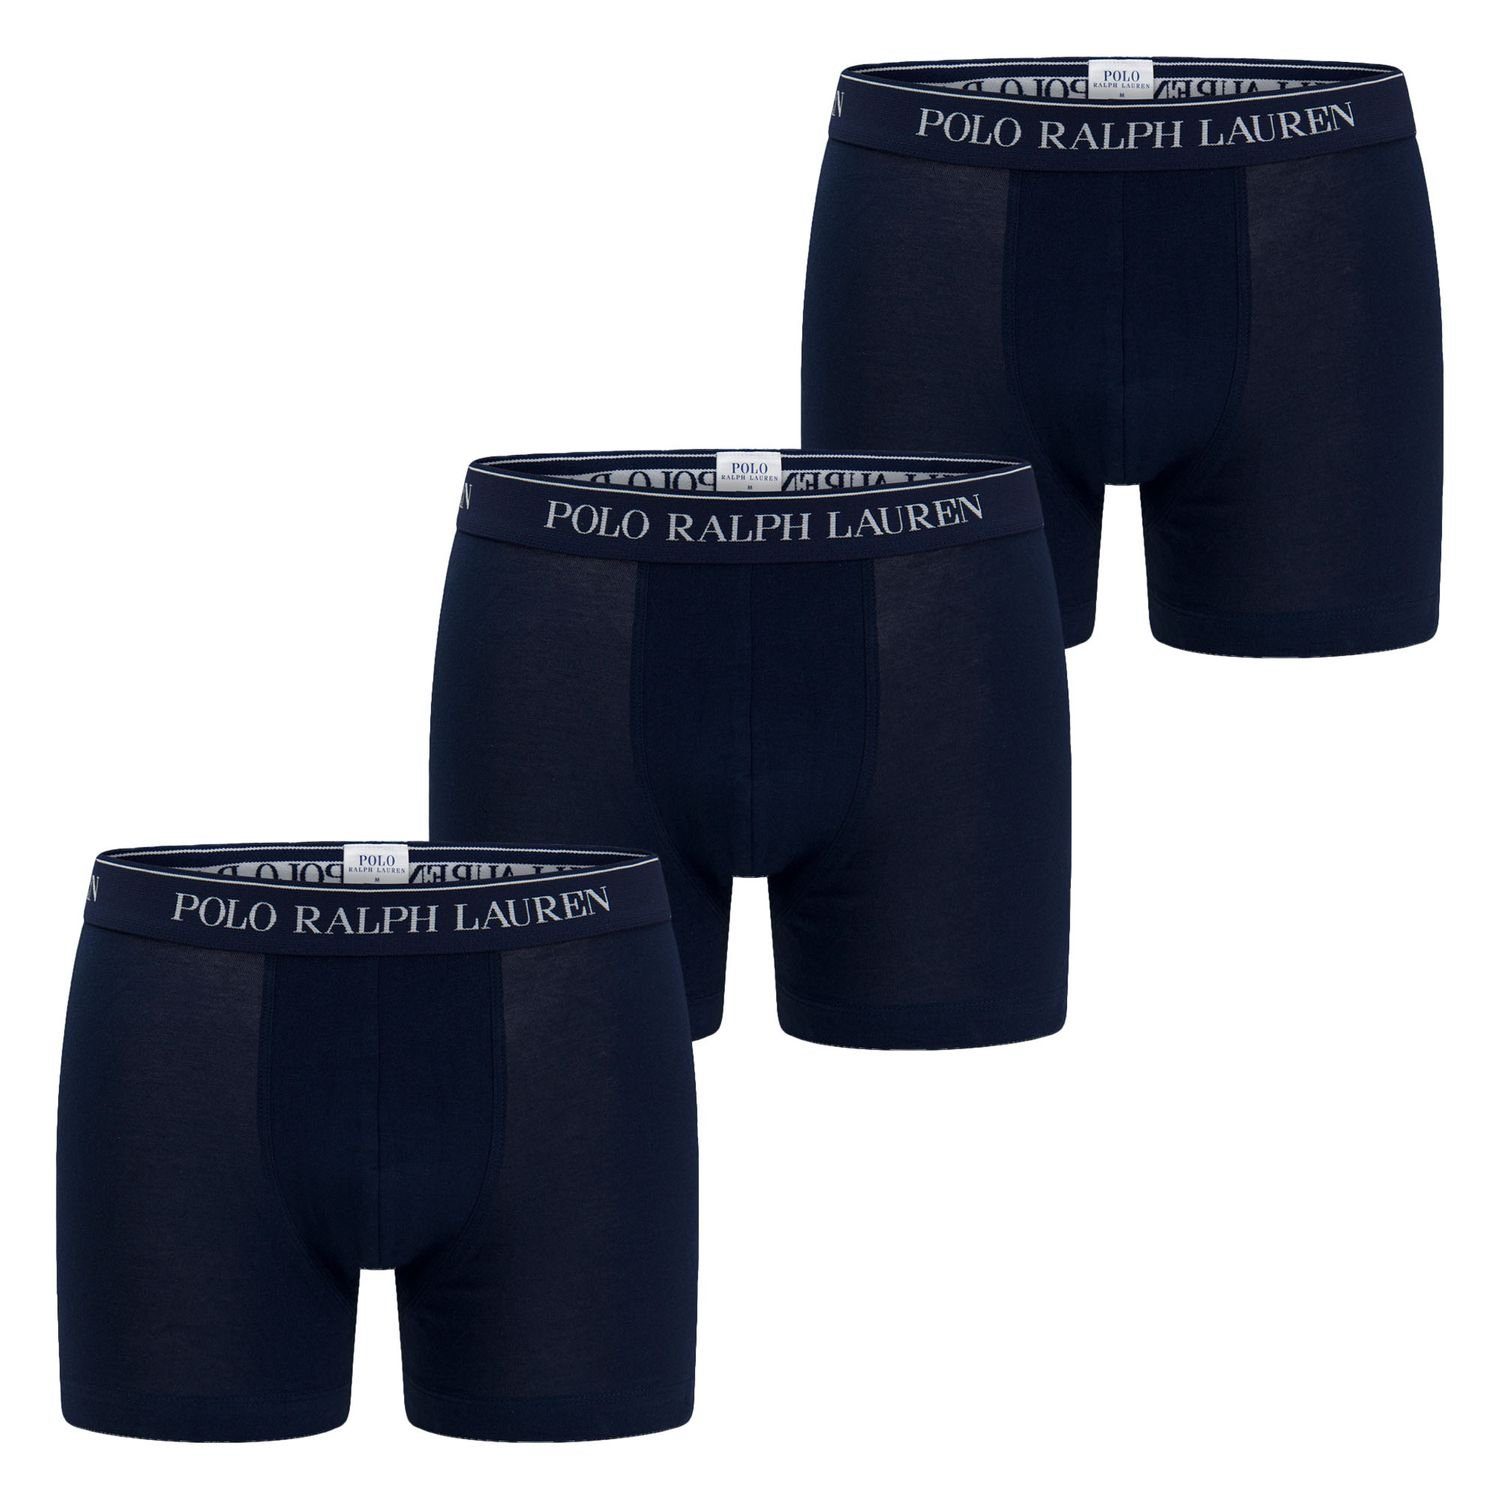 Polo Ralph Lauren Boxershorts CLASSIC TRUNK 3er Pack (3-St) mit Logo Webbund 3PK CR NVY/CR NVY/ CR NVY 004